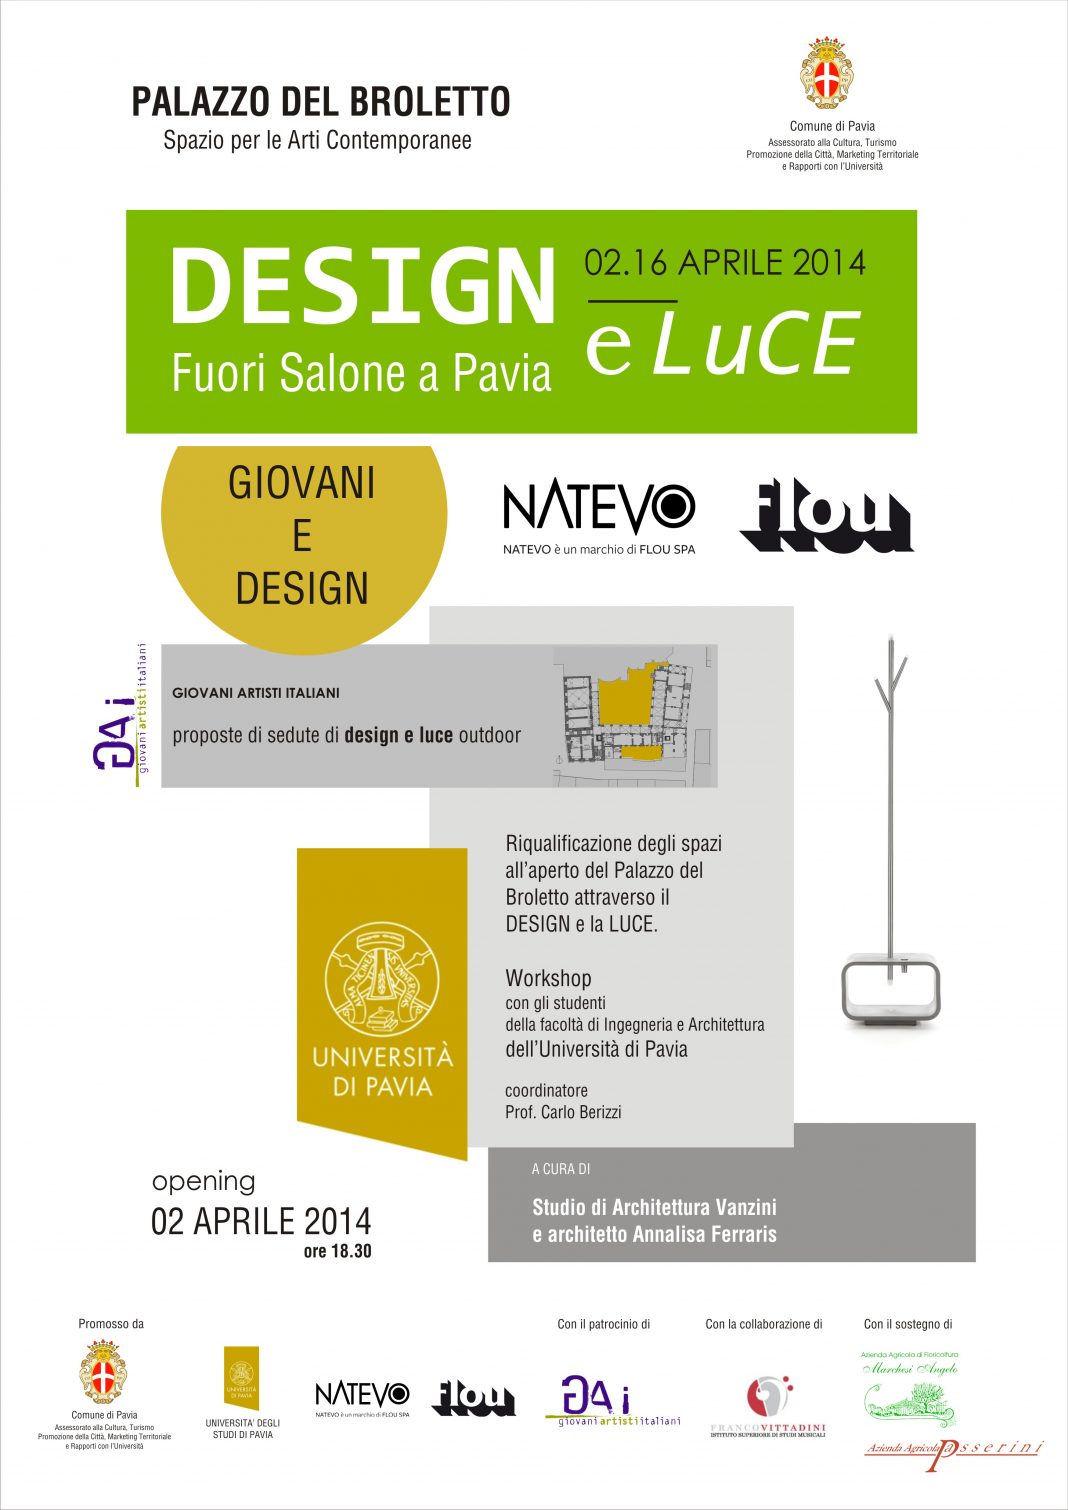 DESIGN e LUCE – fuorisalone a Paviahttps://www.exibart.com/repository/media/eventi/2014/03/design-e-luce-8211-fuorisalone-a-pavia-1068x1510.jpg